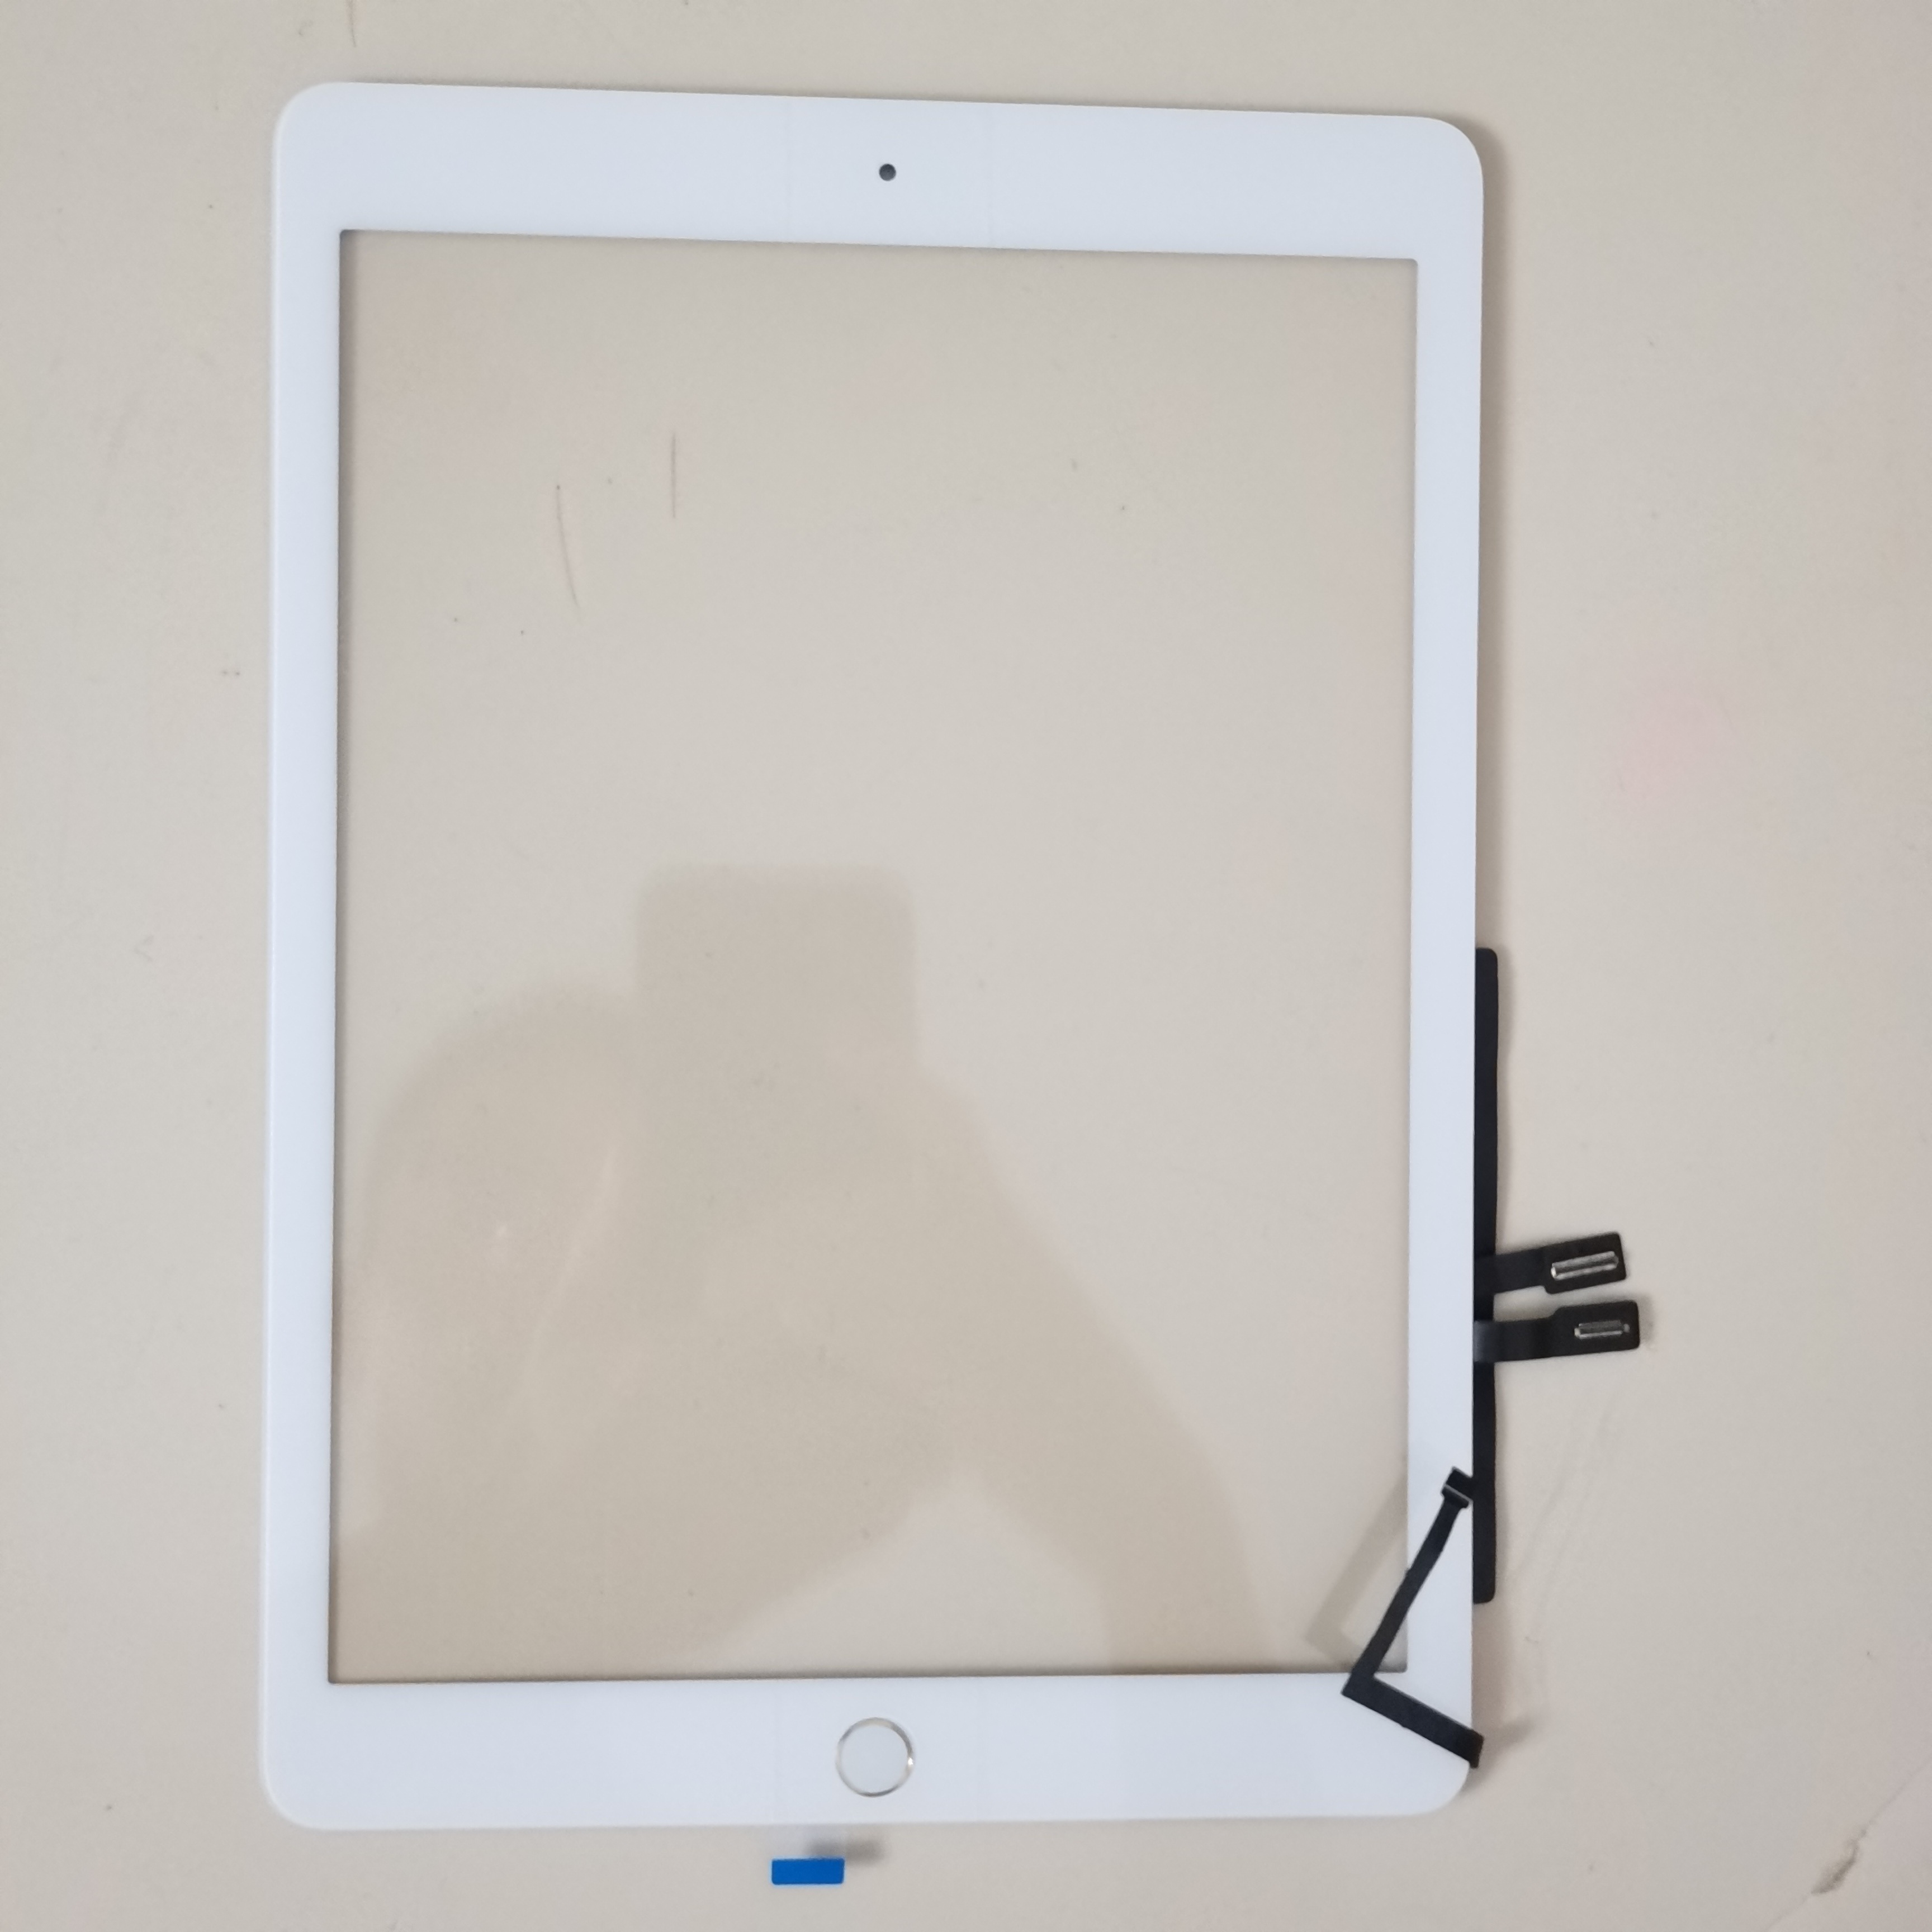 Soporte de pared universal para tablet . Apto para  iPhone/tableta/ipad/Kindle/ebook se puede fijar con adhesivo o tornillo.  Ideal para carga de teléfo